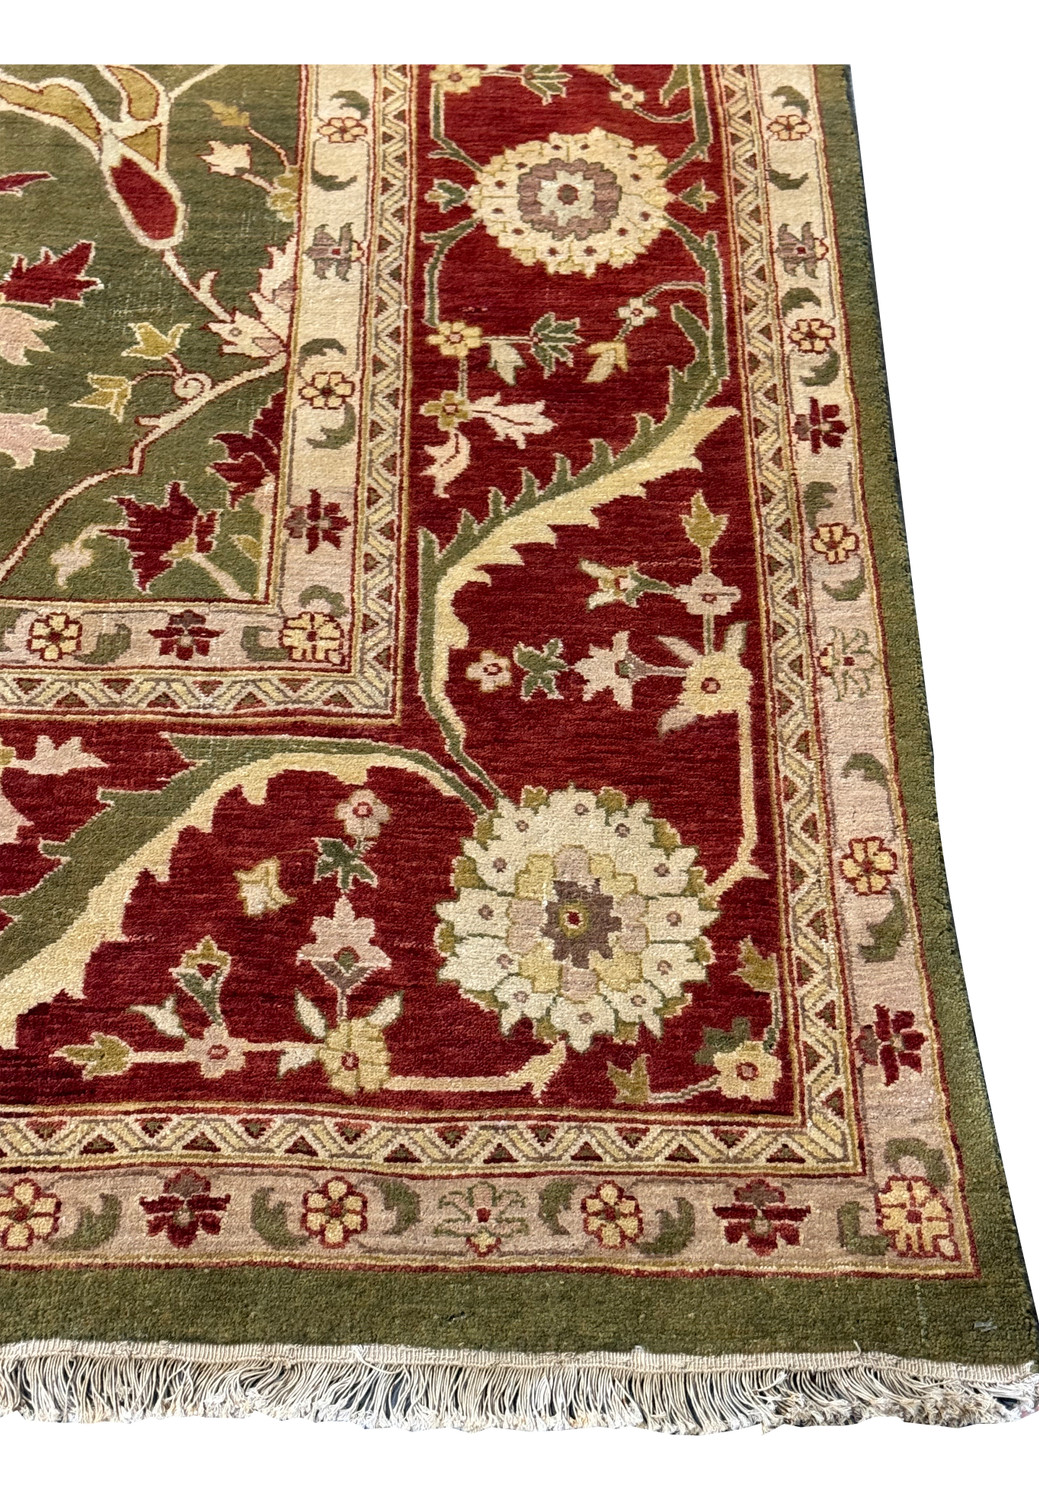 Spacious 10x15 Oriental rug with Chobi Peshawar design and ornate border details